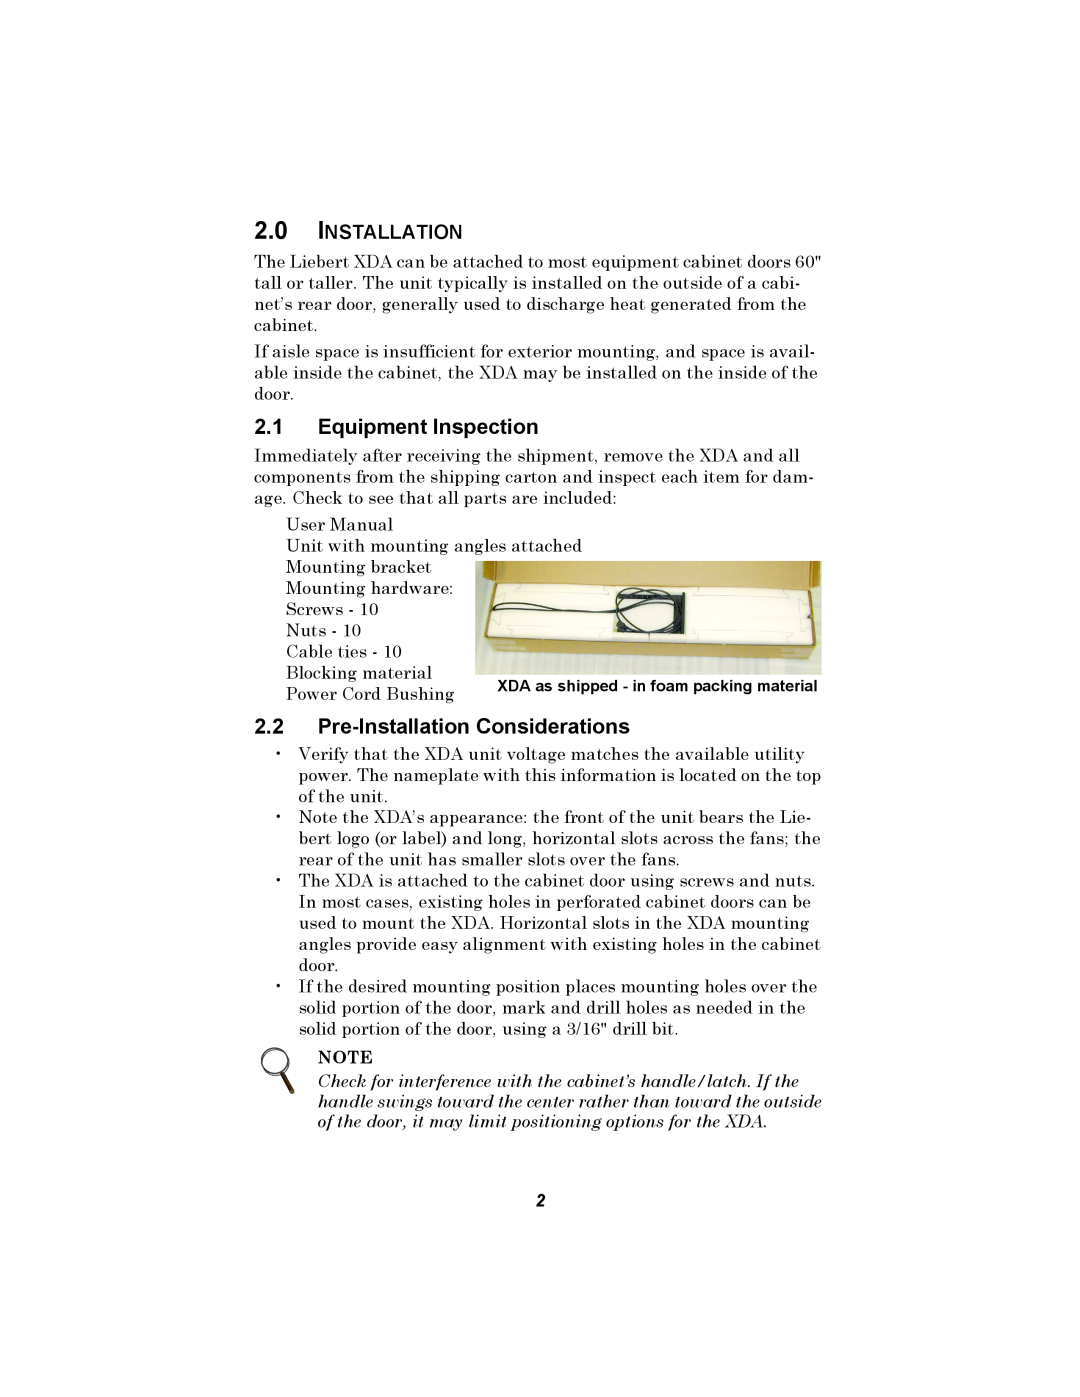 Liebert XDA user manual Equipment Inspection, Pre-Installation Considerations 